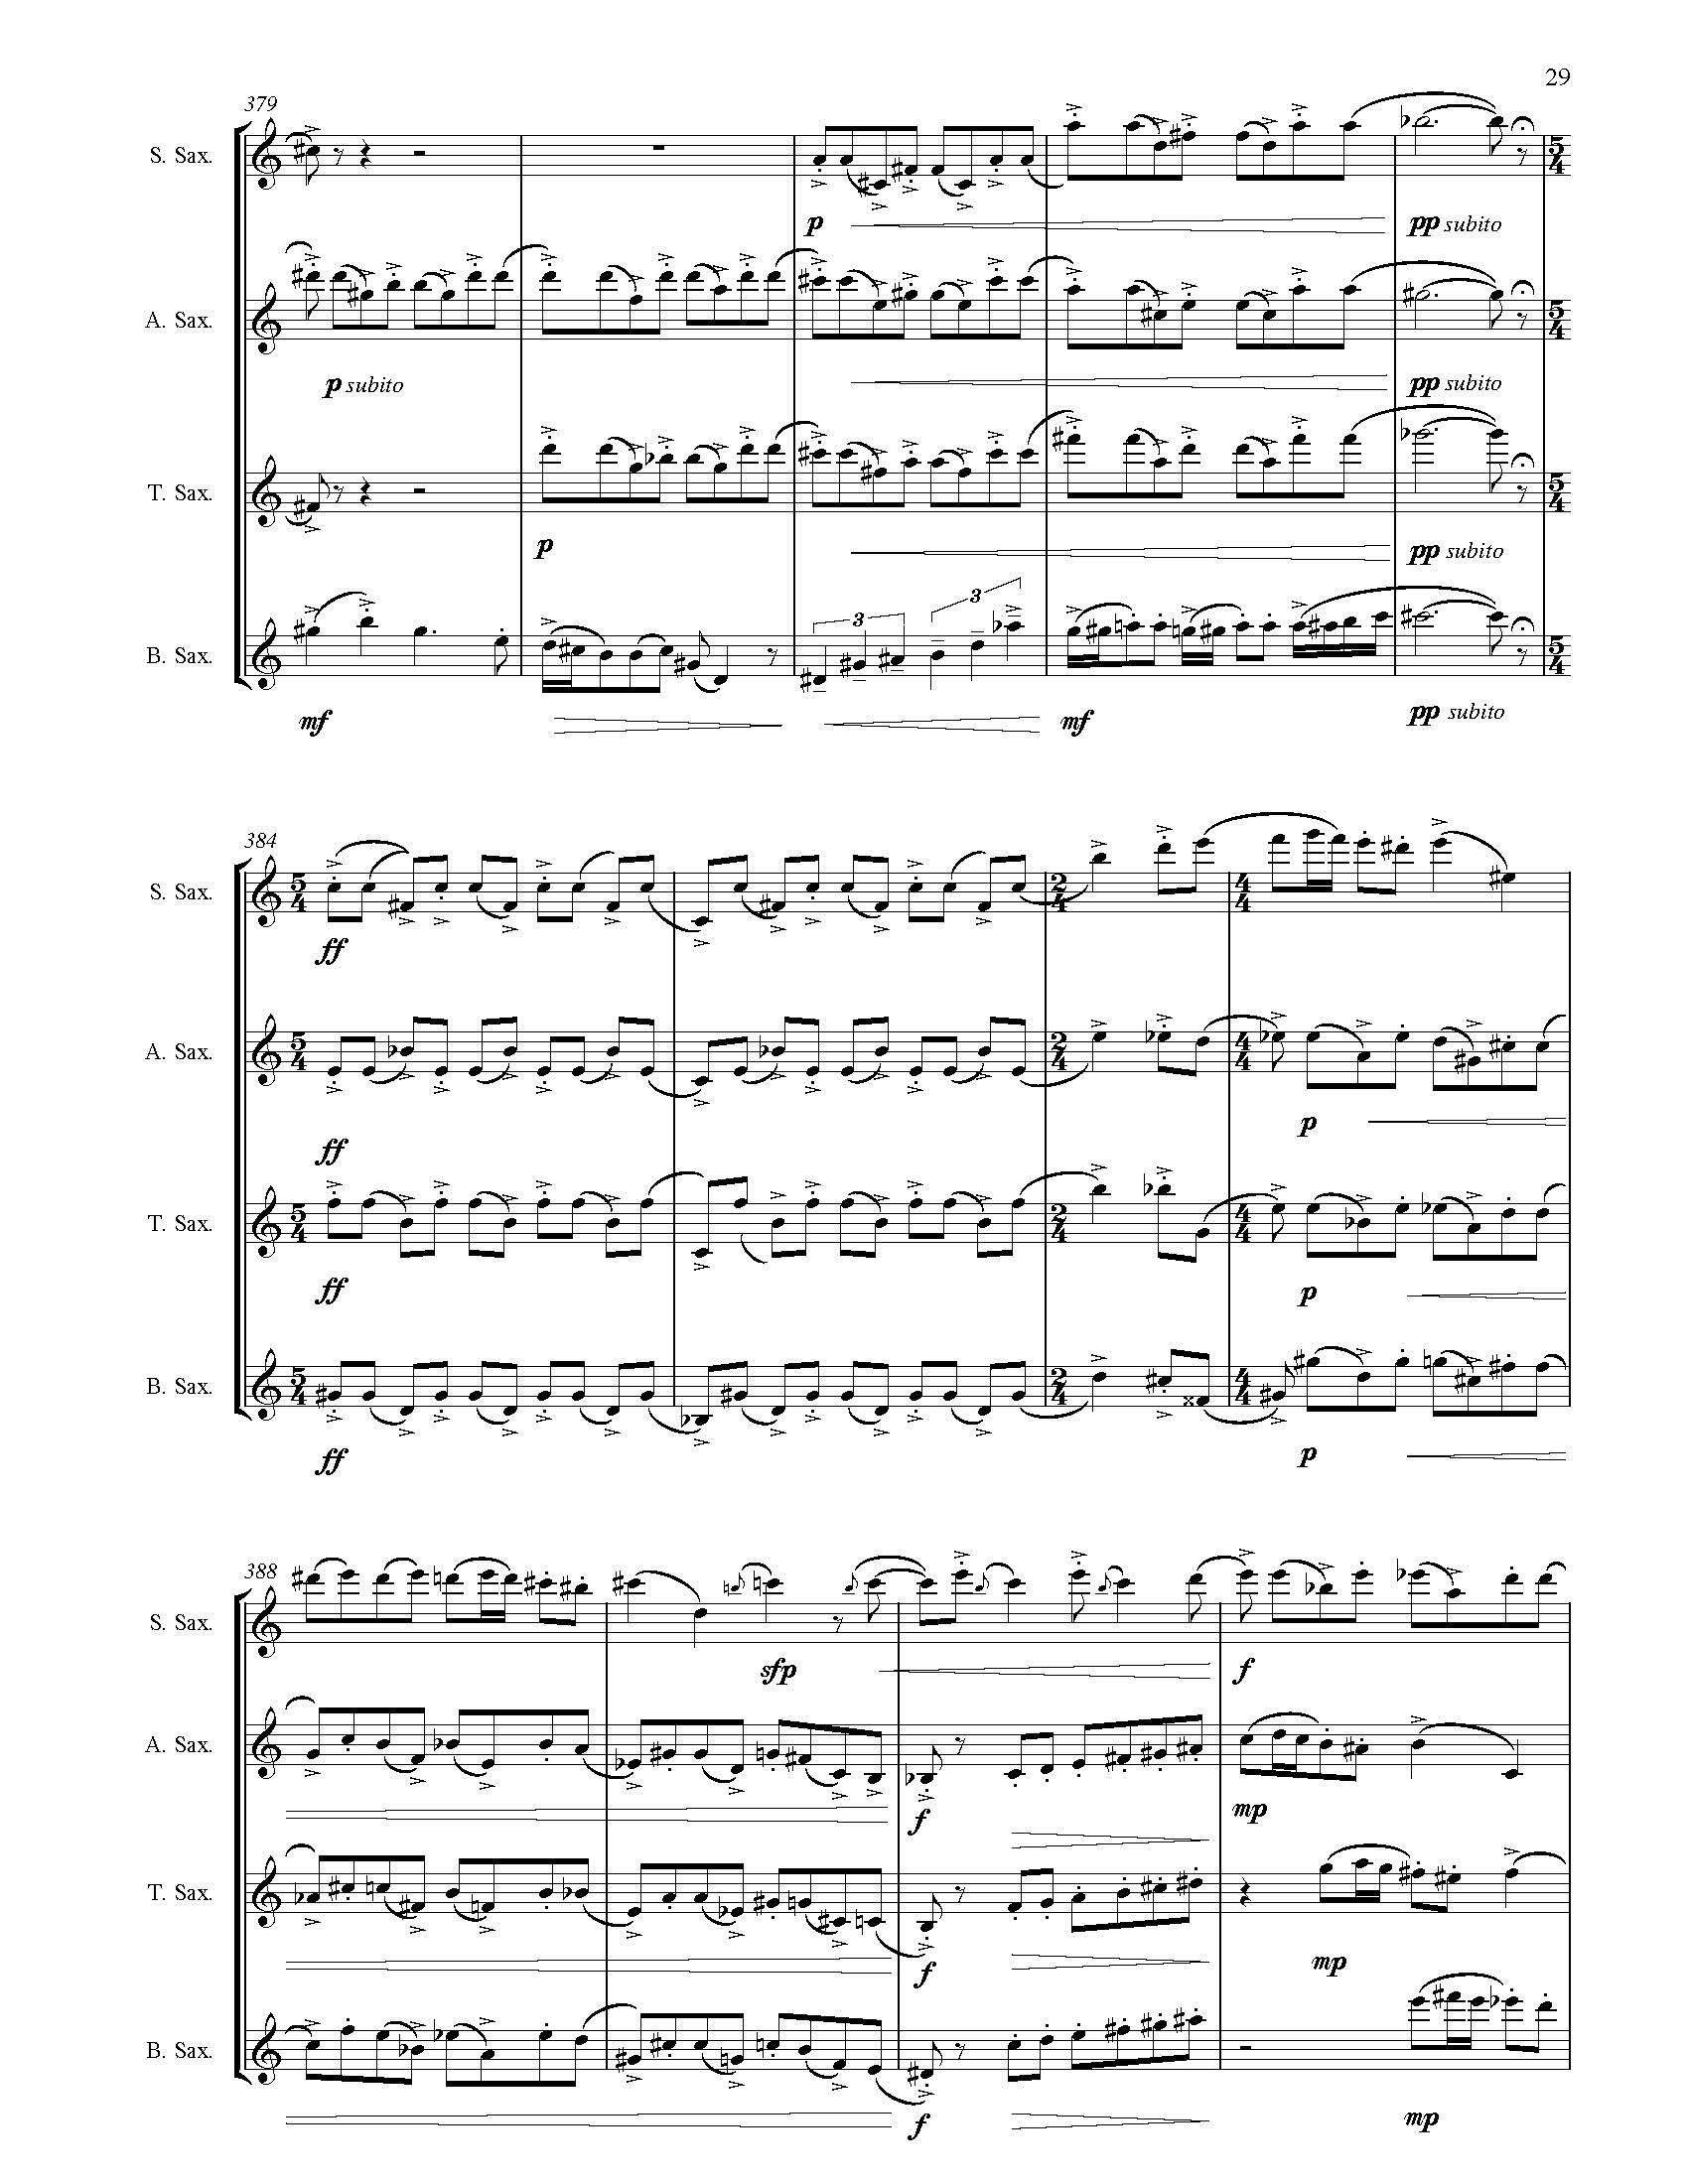 The Revivalist - Complete Score_Page_37.jpg